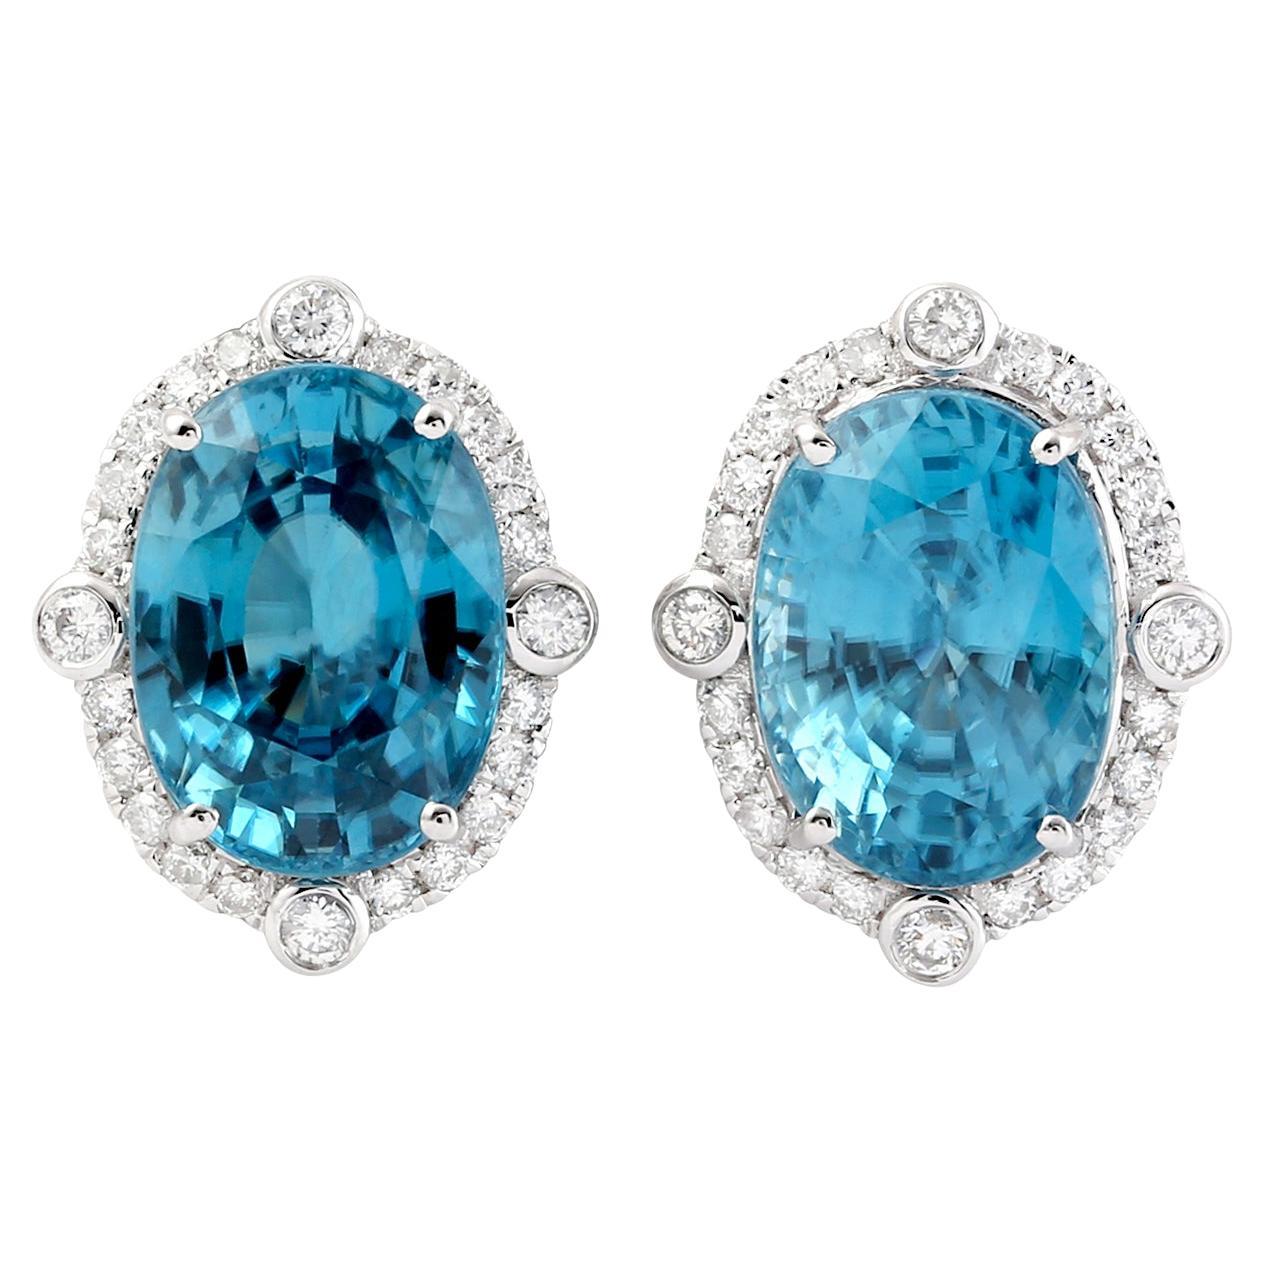 Blue Zircon Stud Earrings With Diamonds 13.18 Carats 18K White Gold